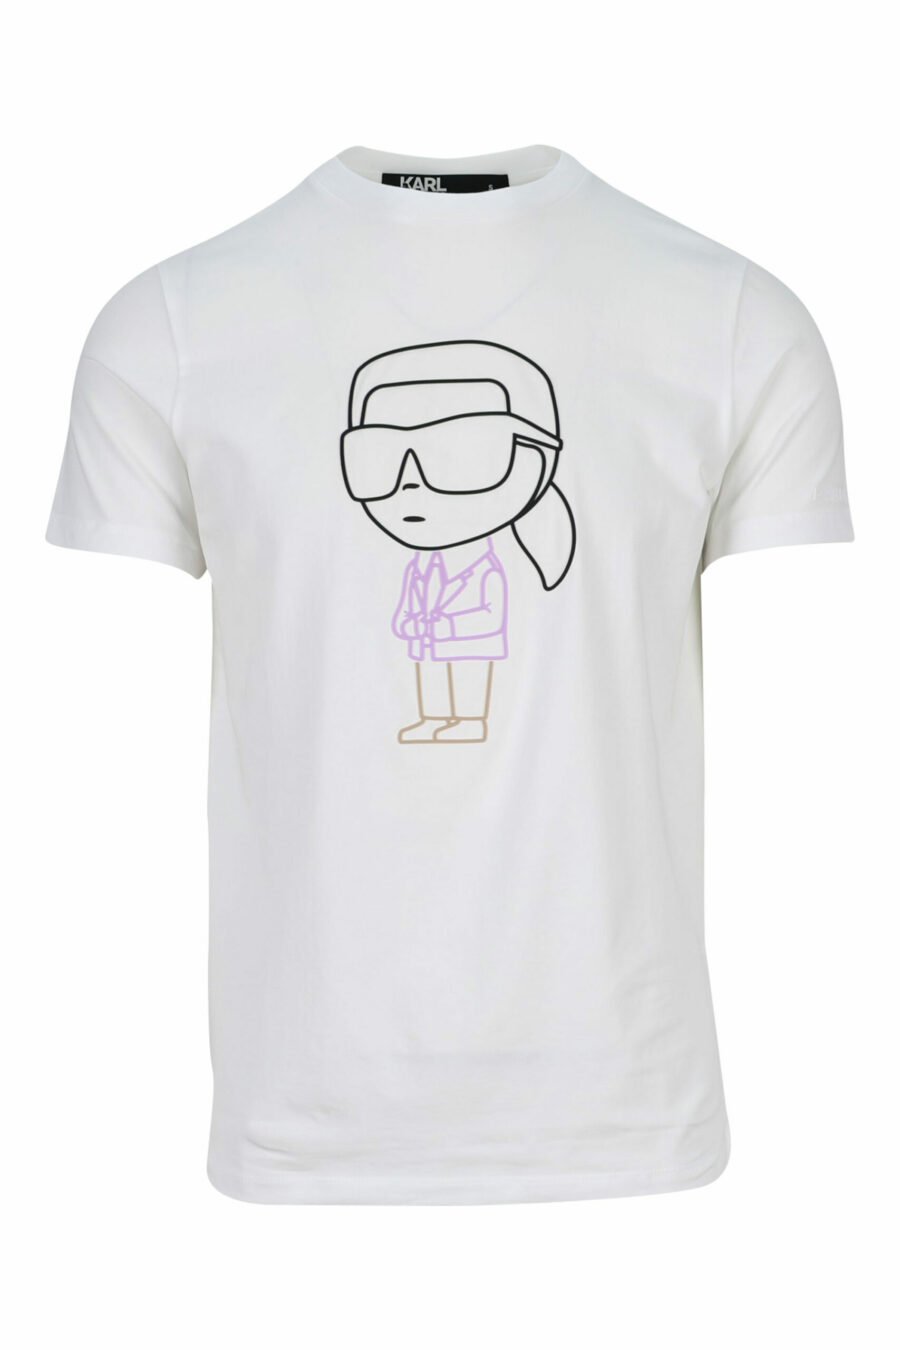 T-shirt branca com maxilogo "karl silhouette" multicolorido - 4062226400701 1 scaled